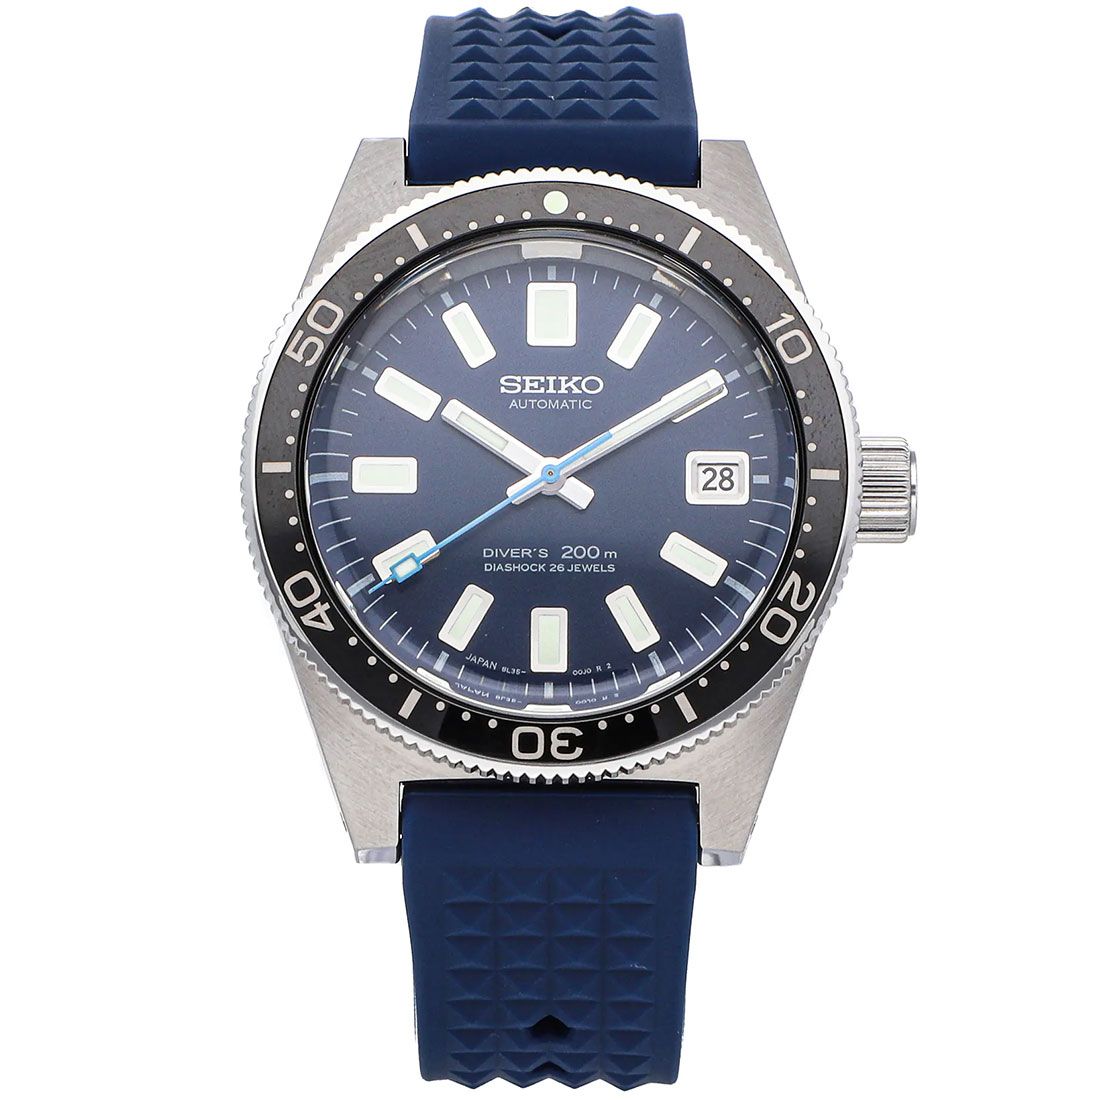 Seiko Prospex JDM Diashock Divers Limited Edition Watch SBDX039 -Seiko